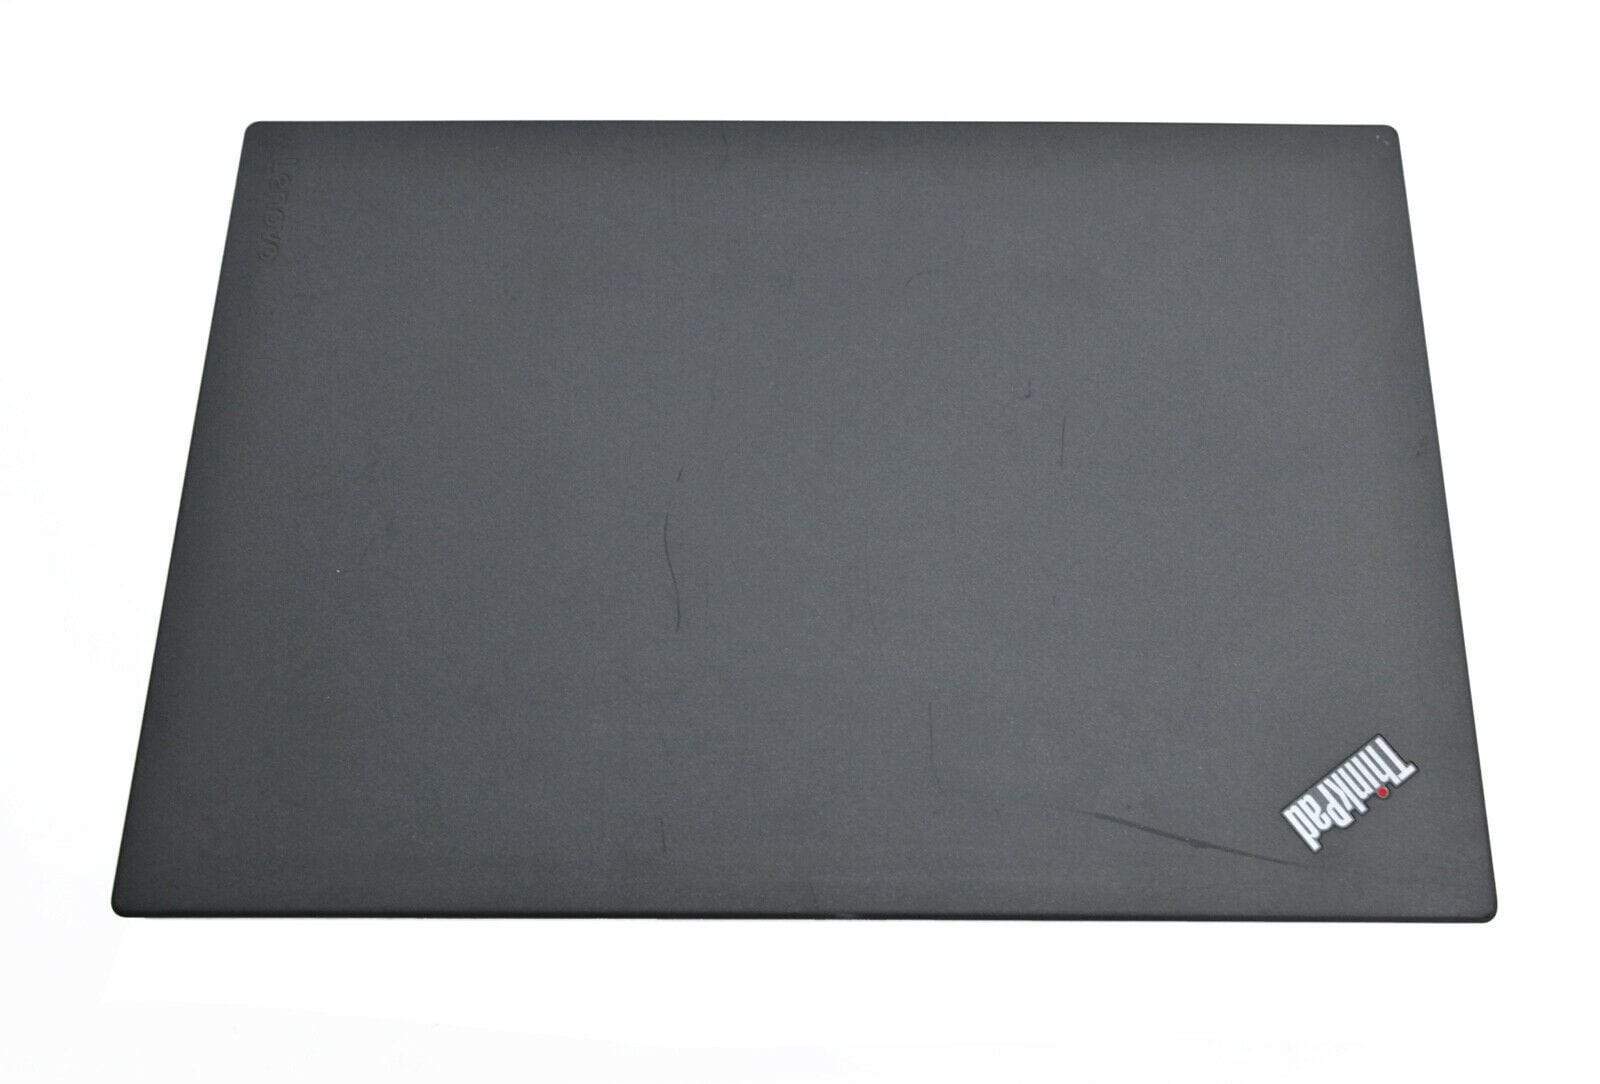 Lenovo Thinkpad X270 UltraBook: 8GB, Core i5-6300U, 128GB, Warranty, 1.3Kg, VAT - CruiseTech